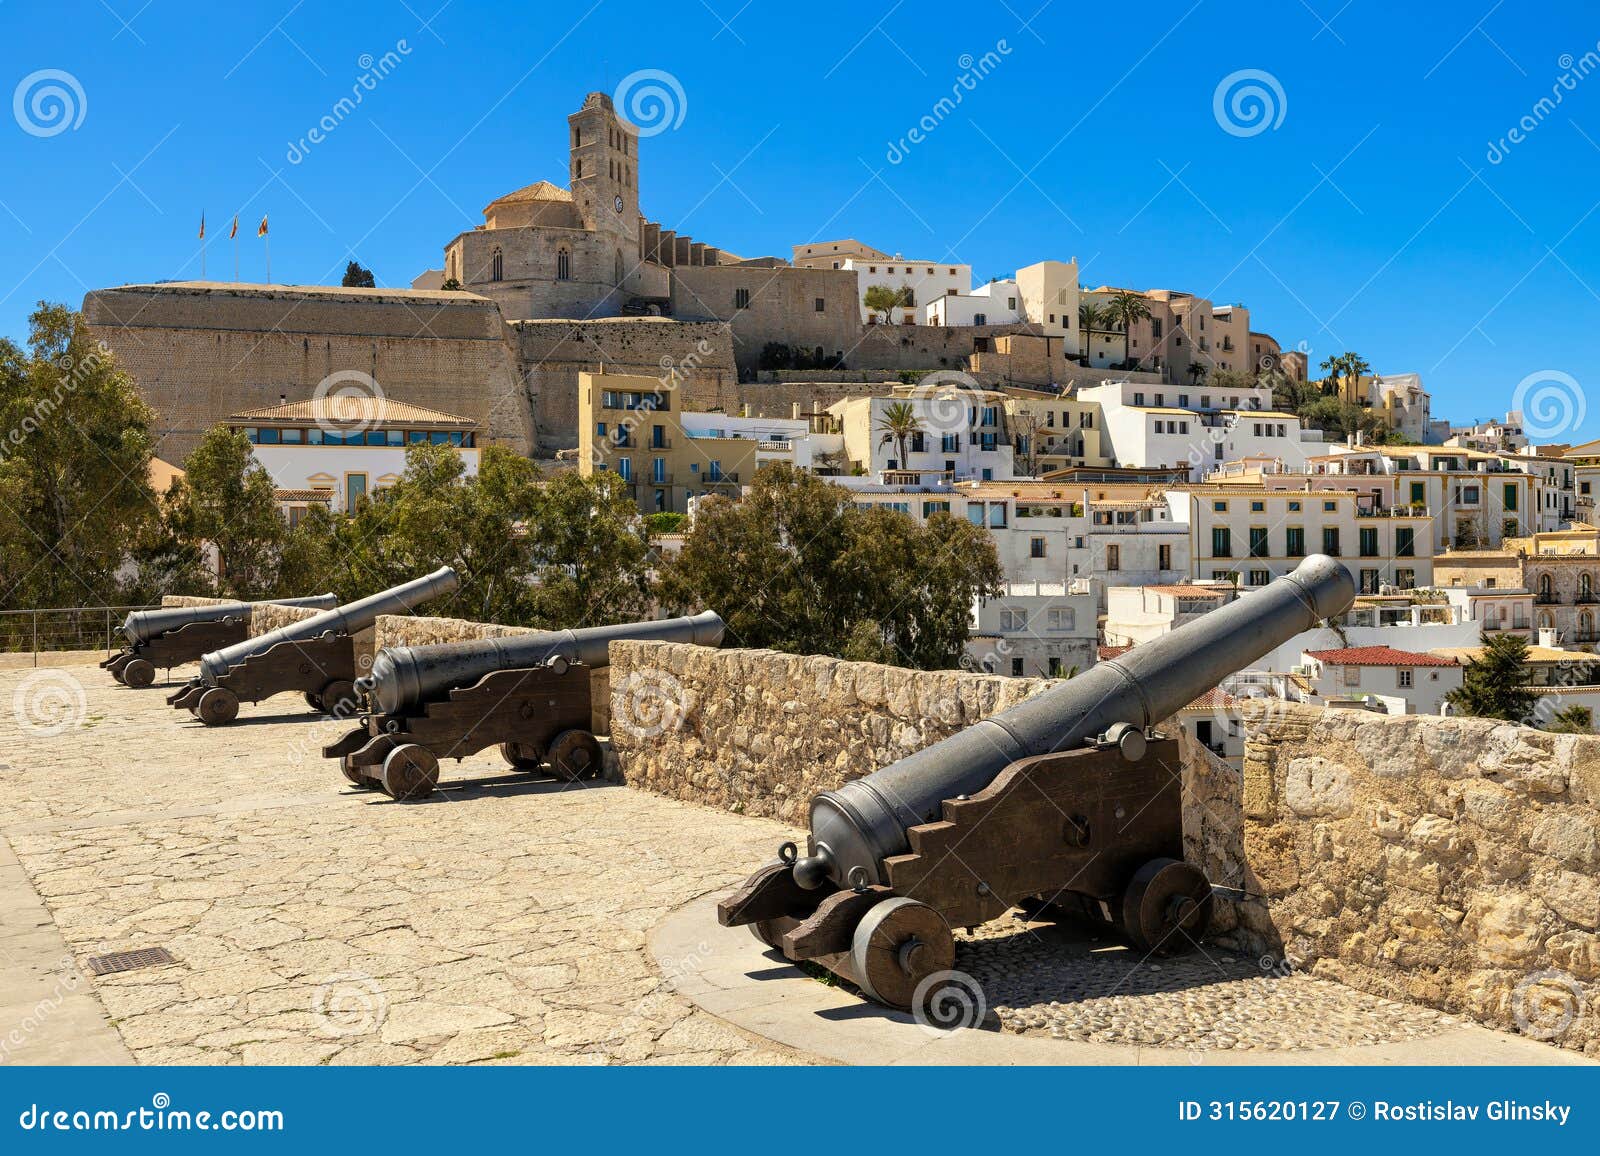 view of the old town of eivissa, ibiza